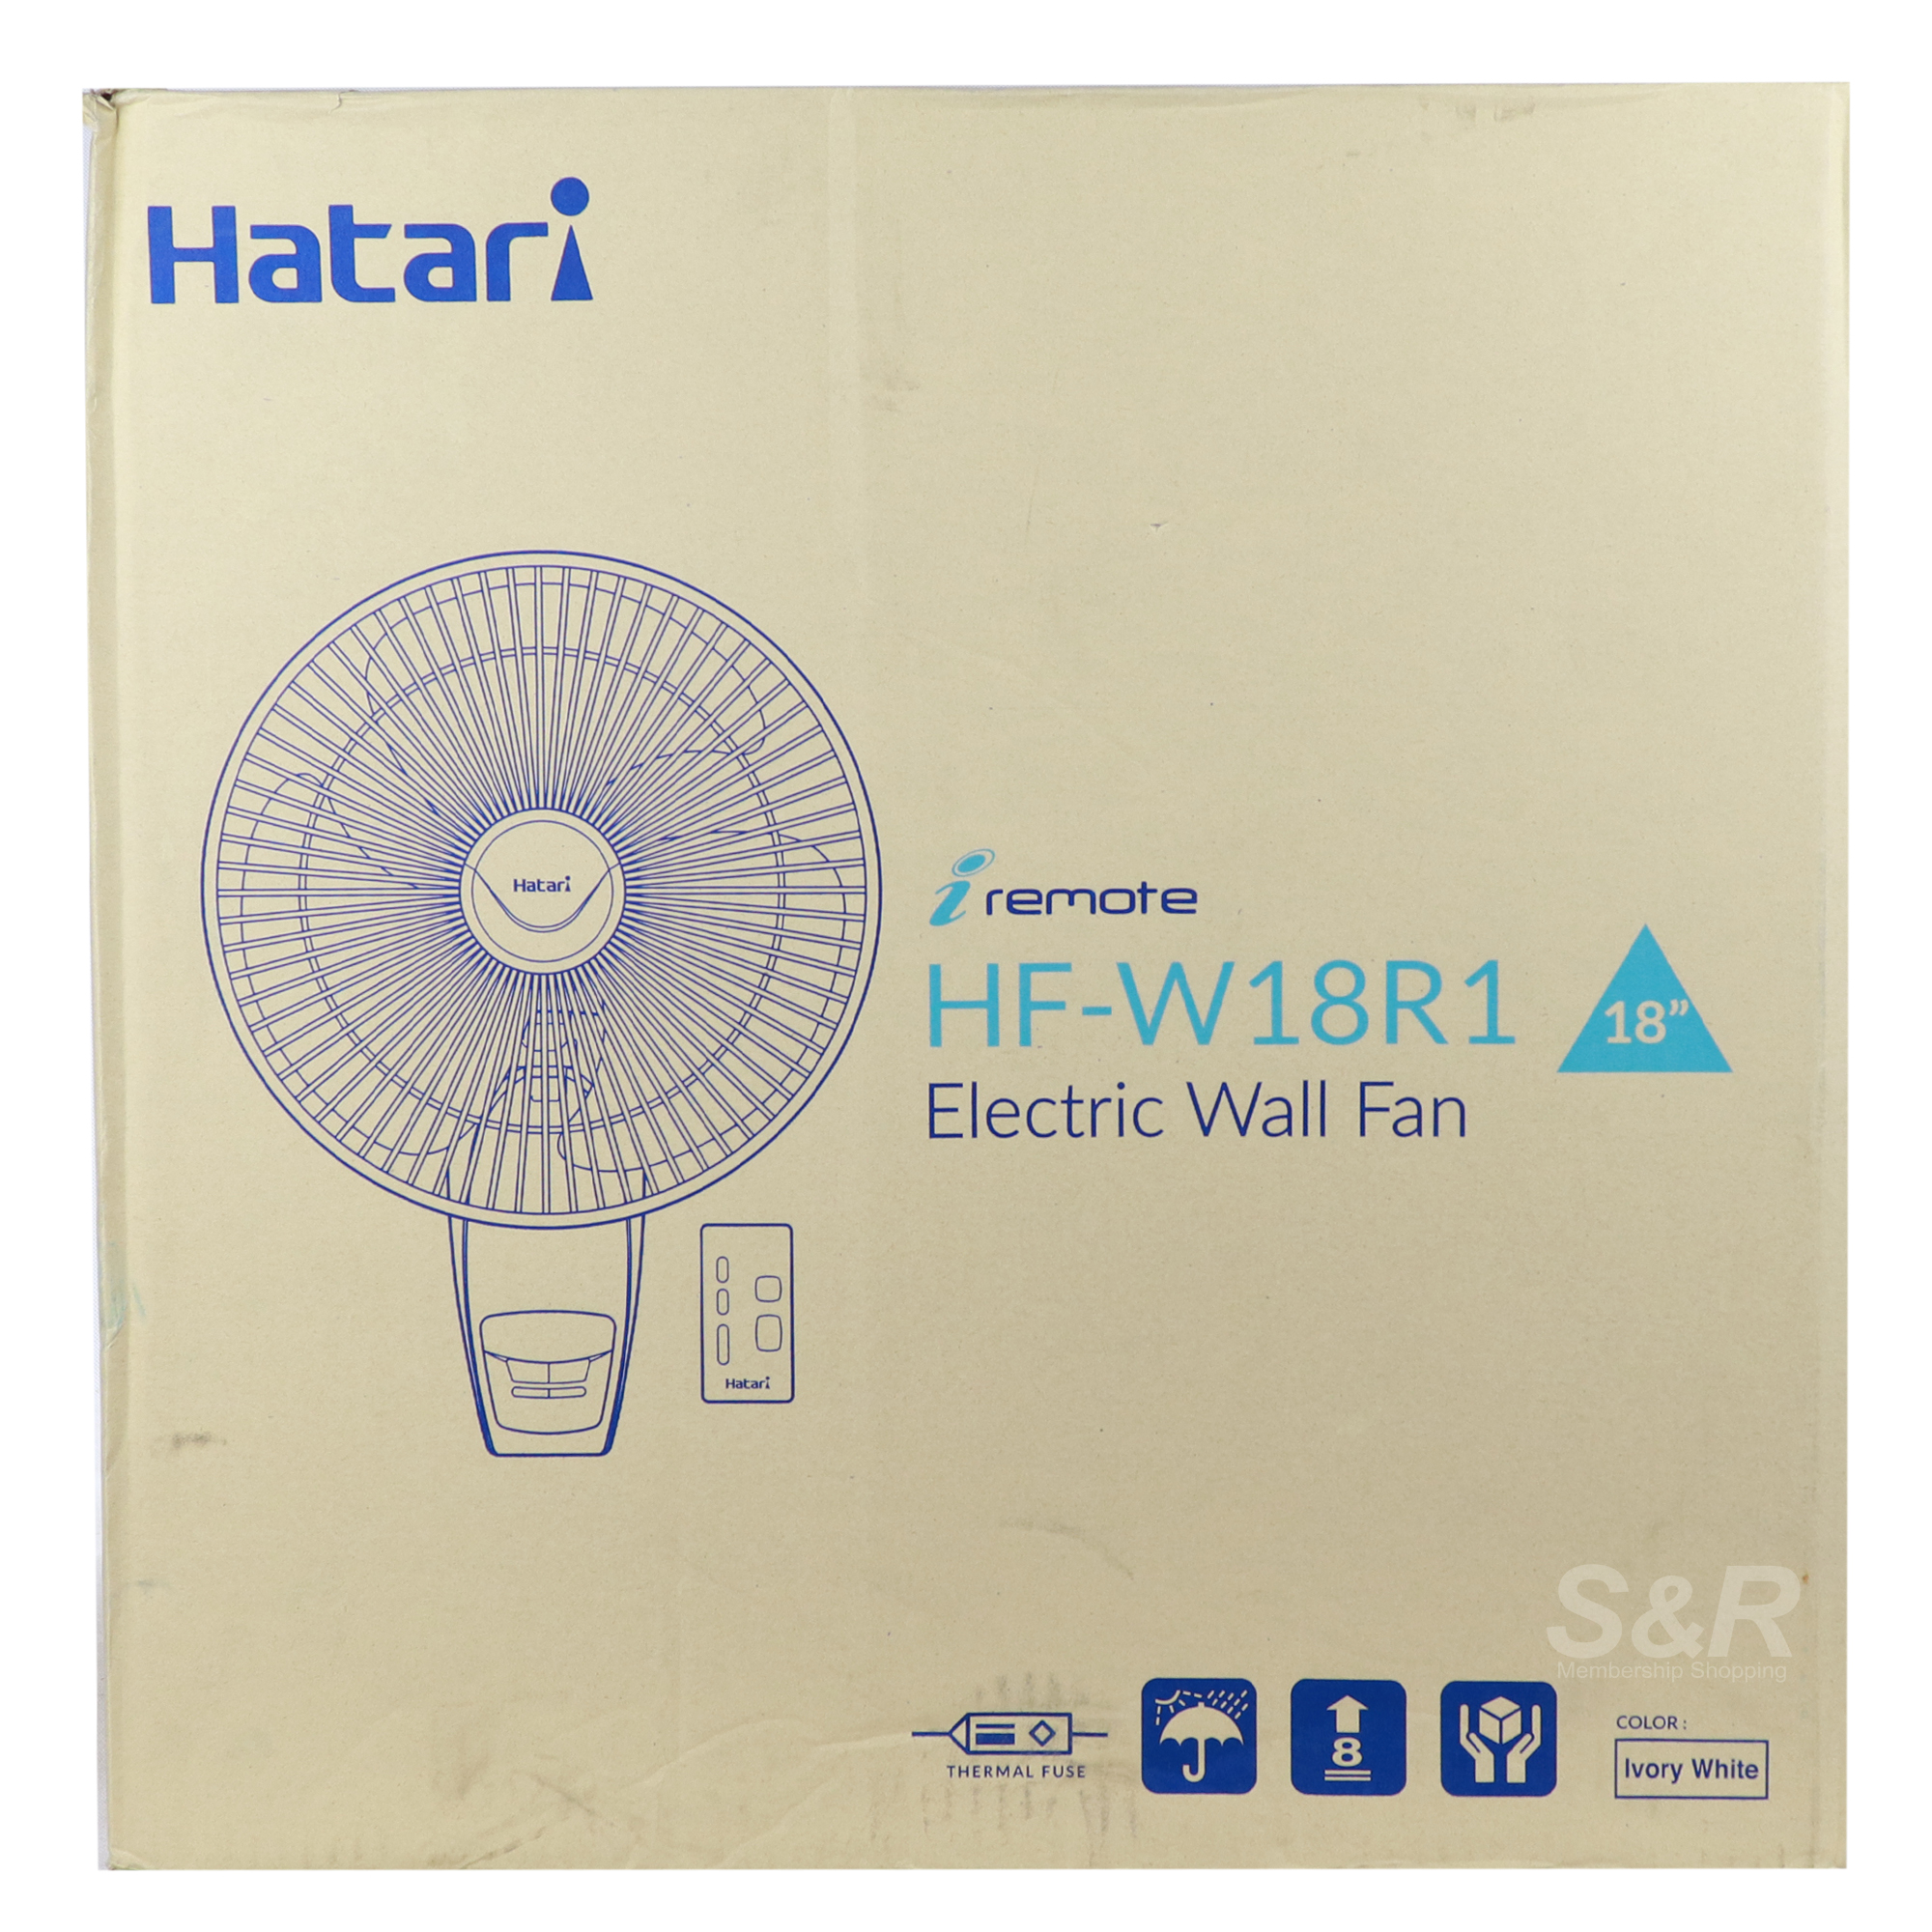 Hatari Electric Wall Fan HF7W18R1